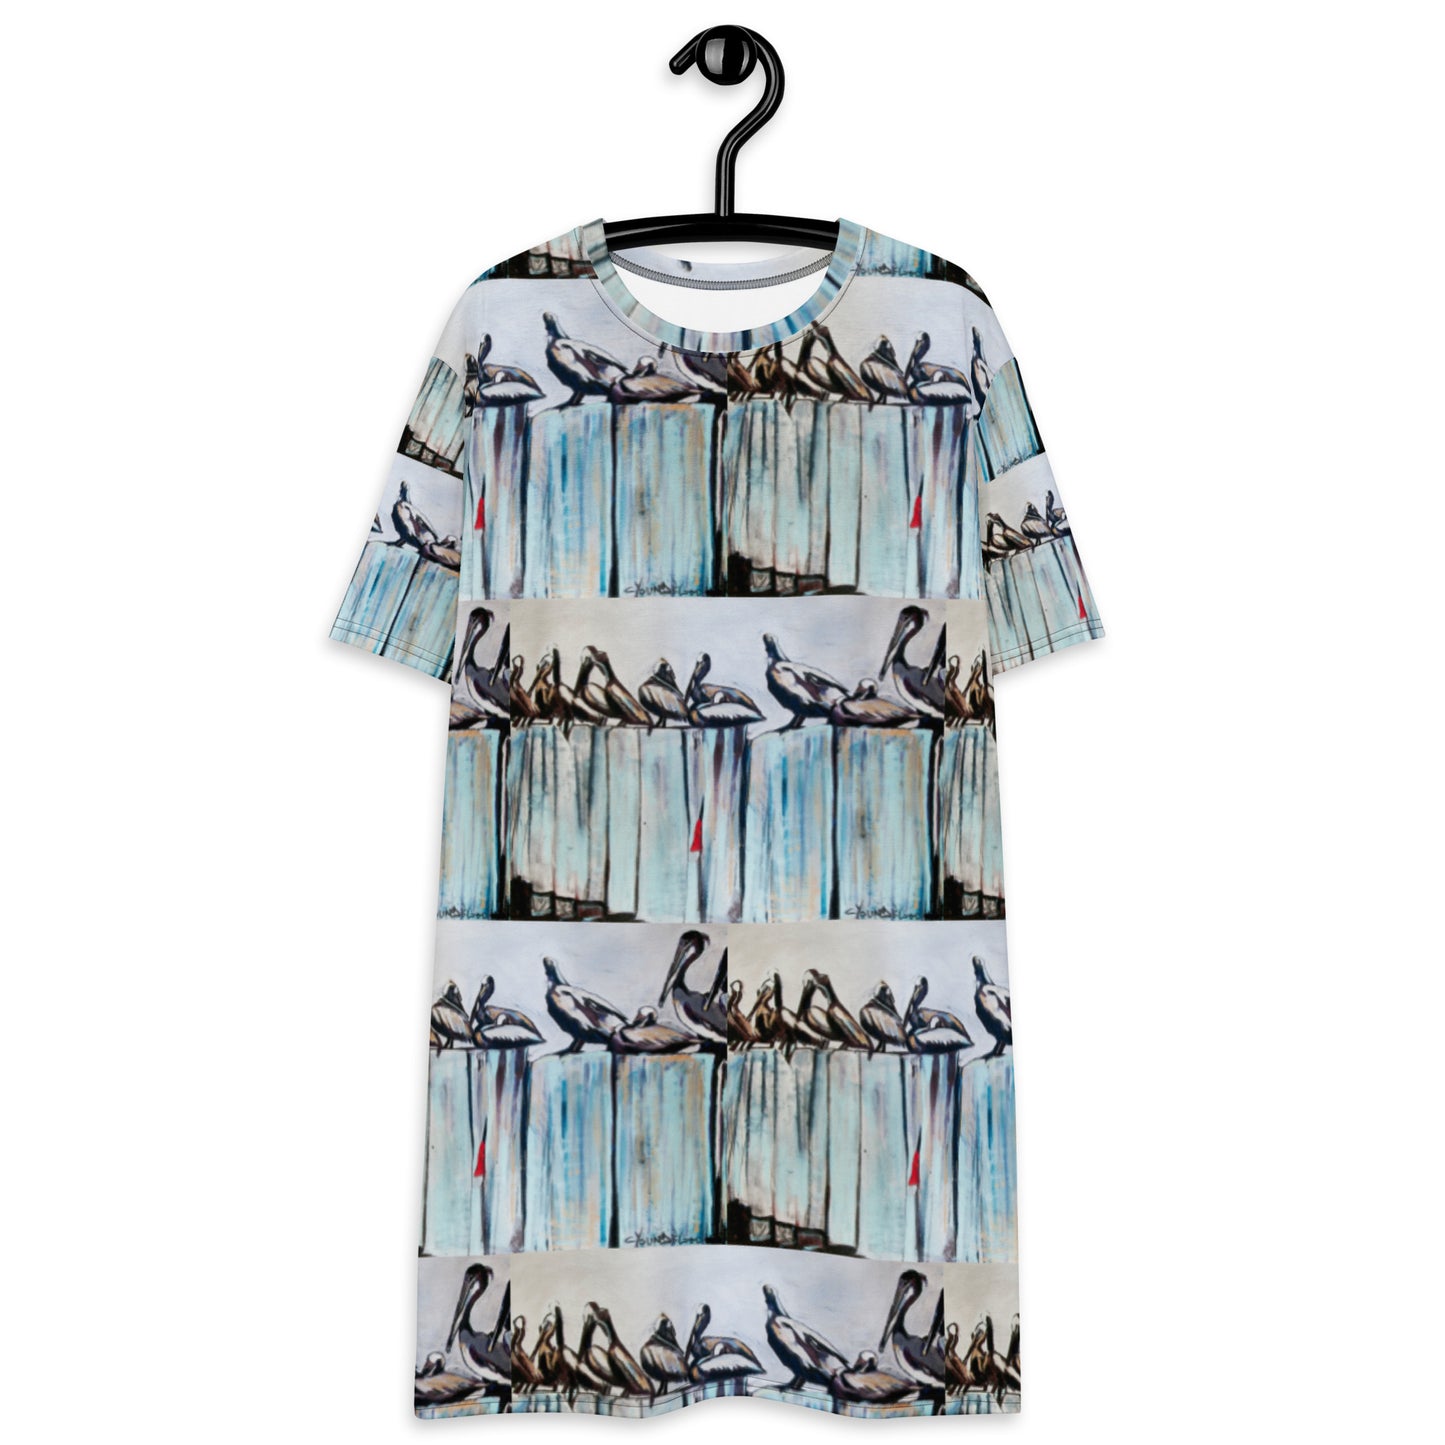 Pelicans on the Pier Pattern T-shirt dress